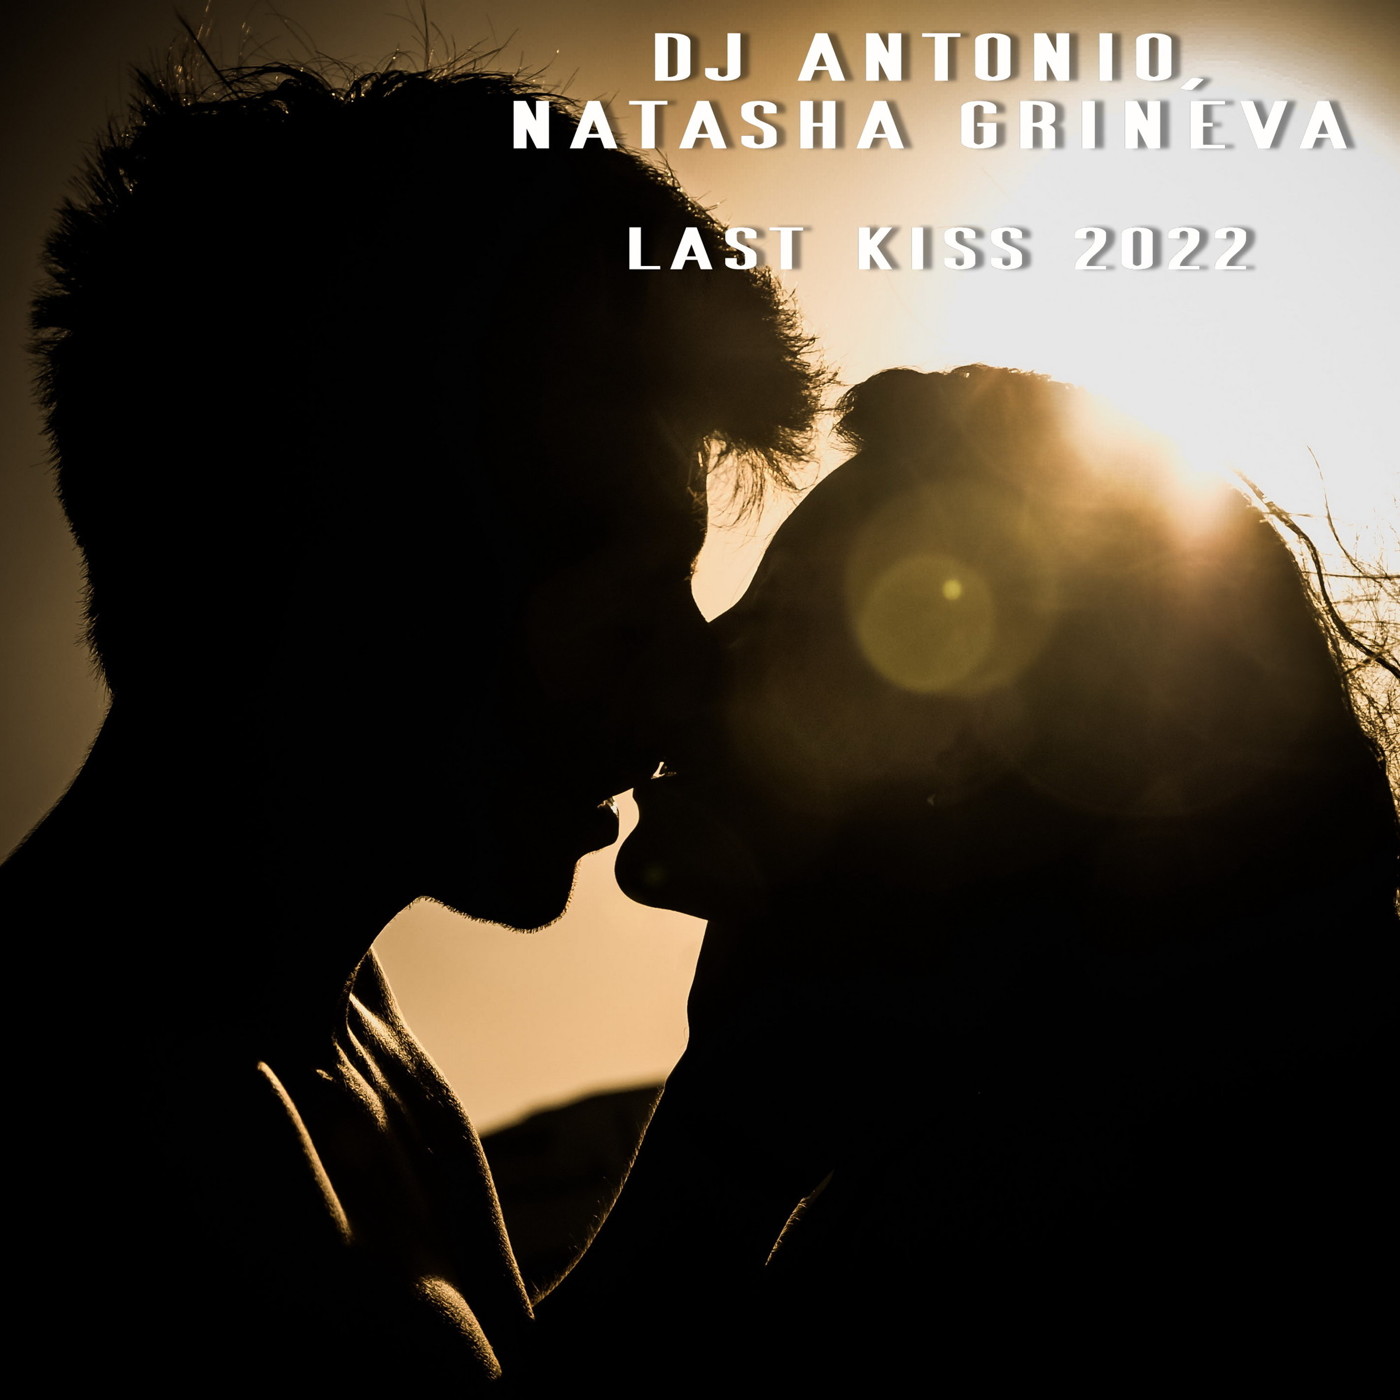 Dj Antonio, Natasha Grineva - Last Kiss 2022